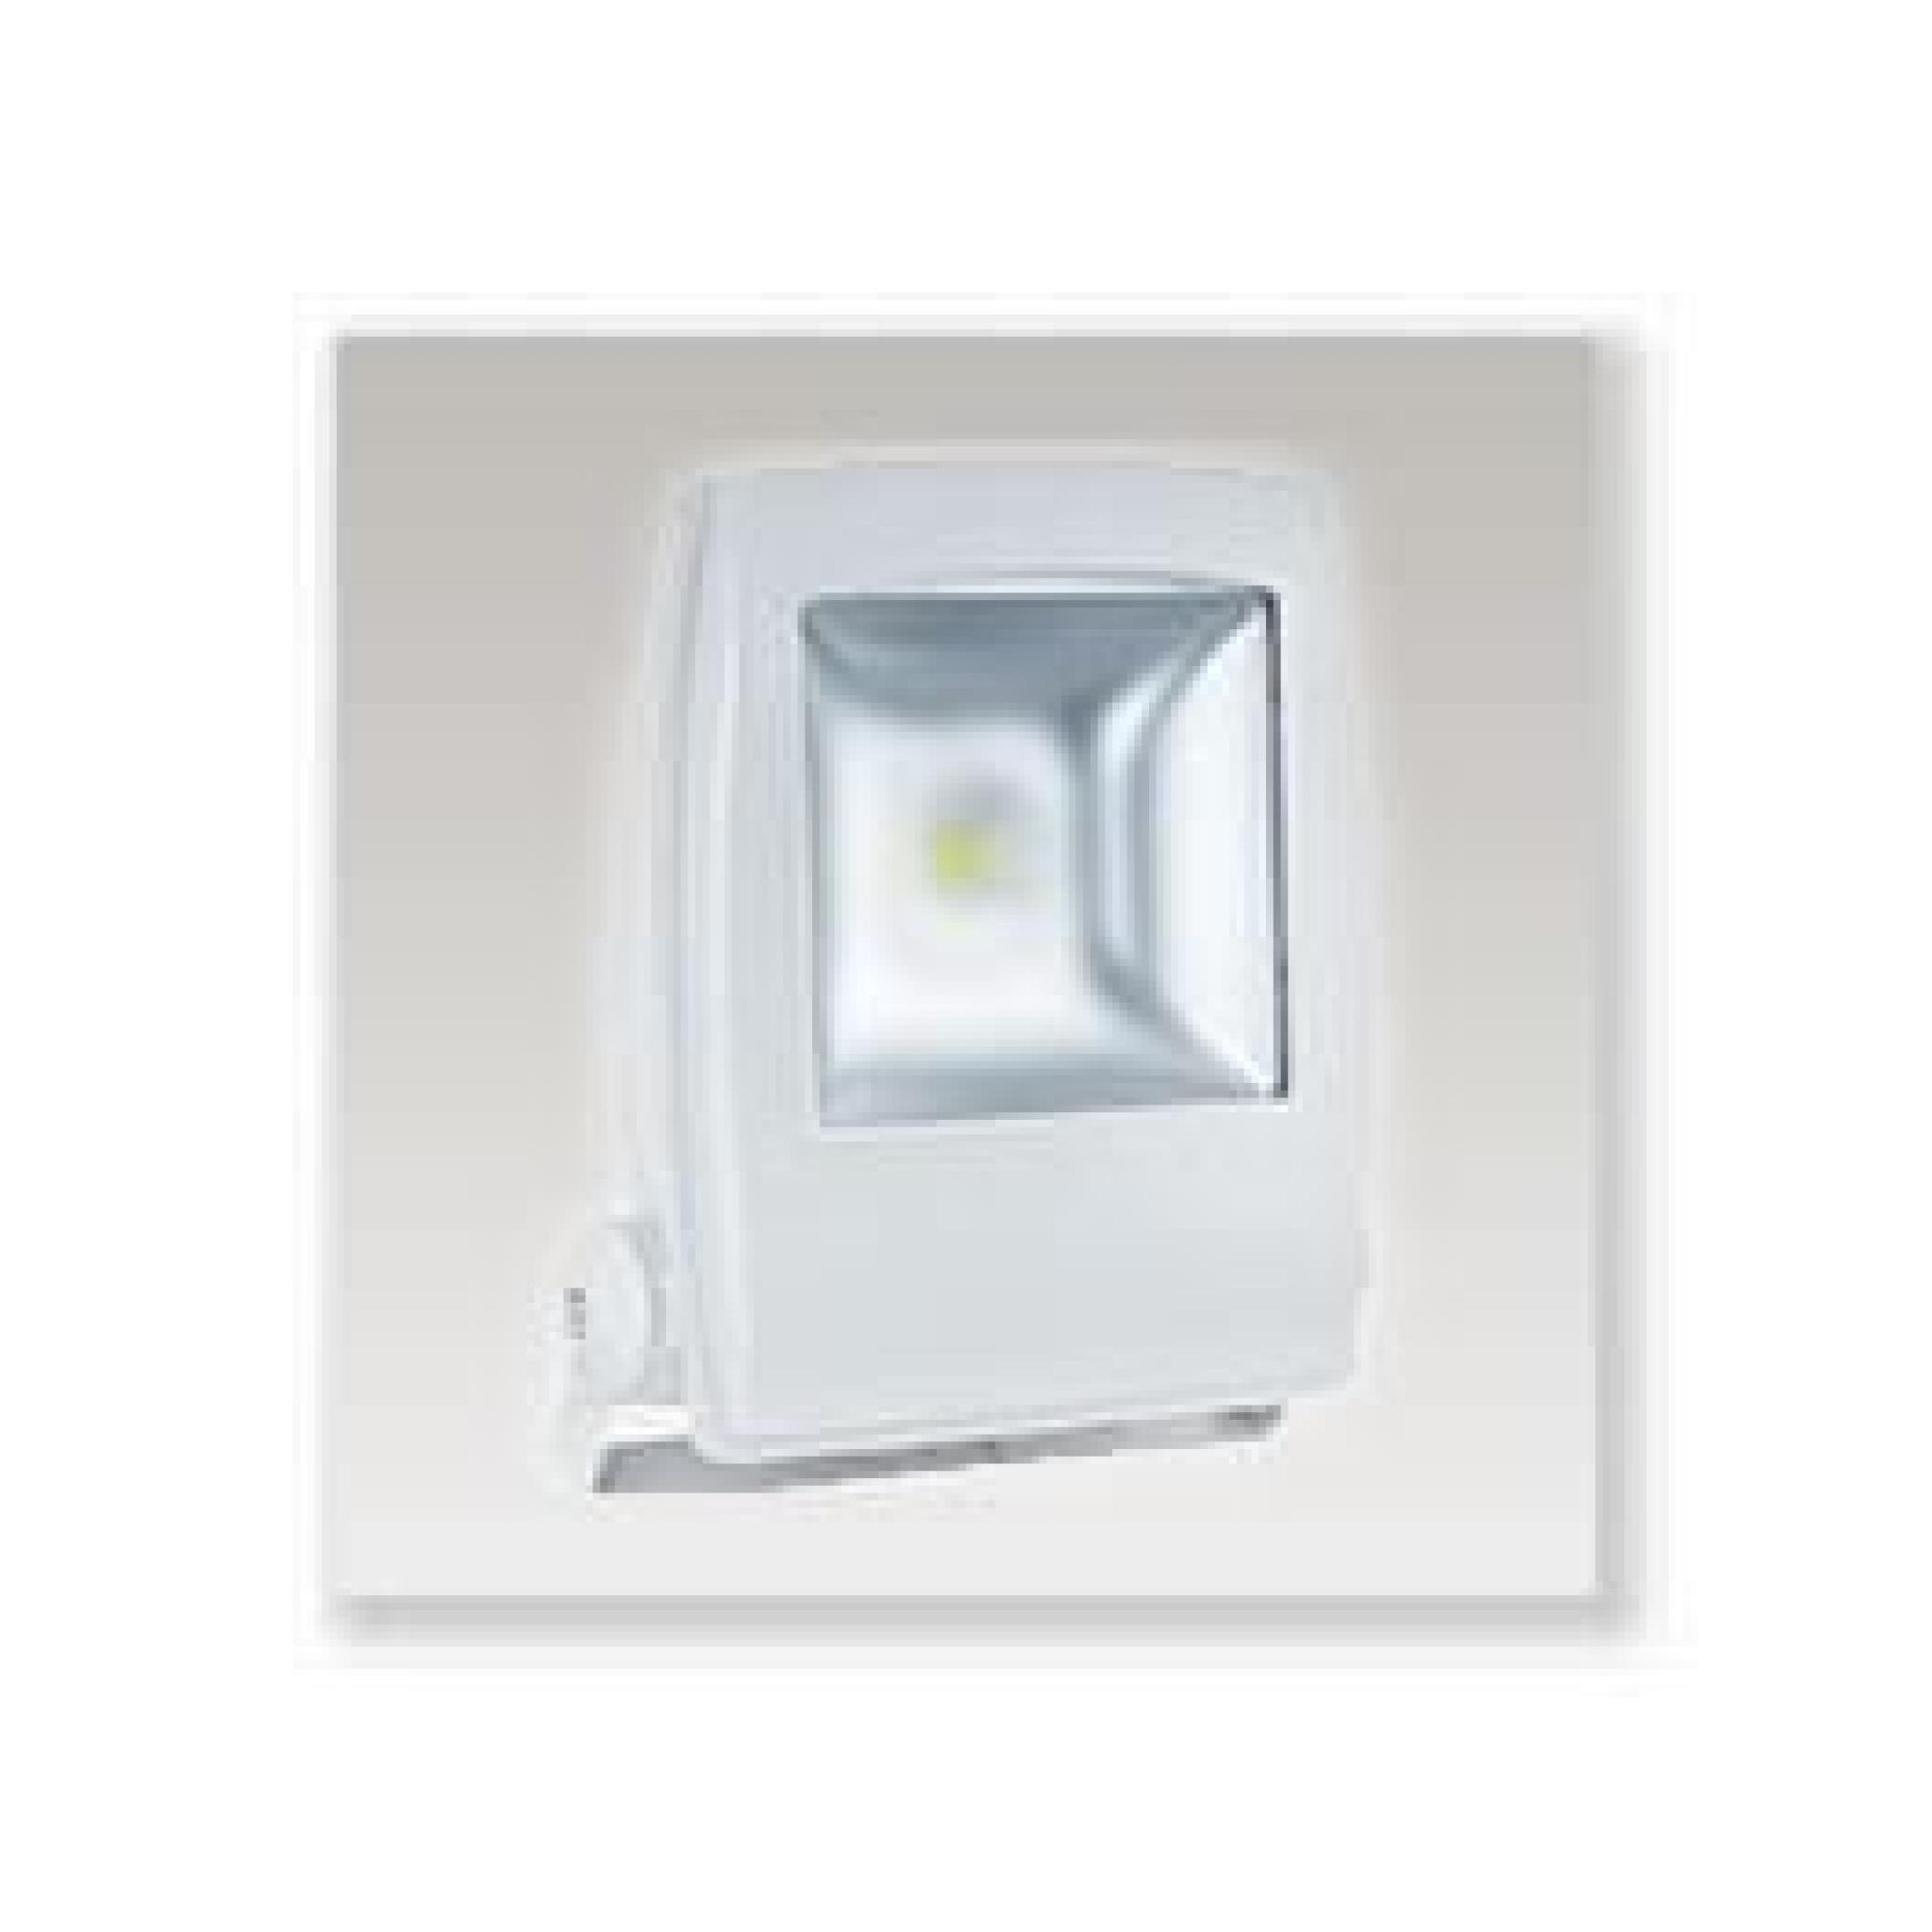 PROJECTEUR LED Plat Blanc 230 V  50 WATT IP 65 6000°K